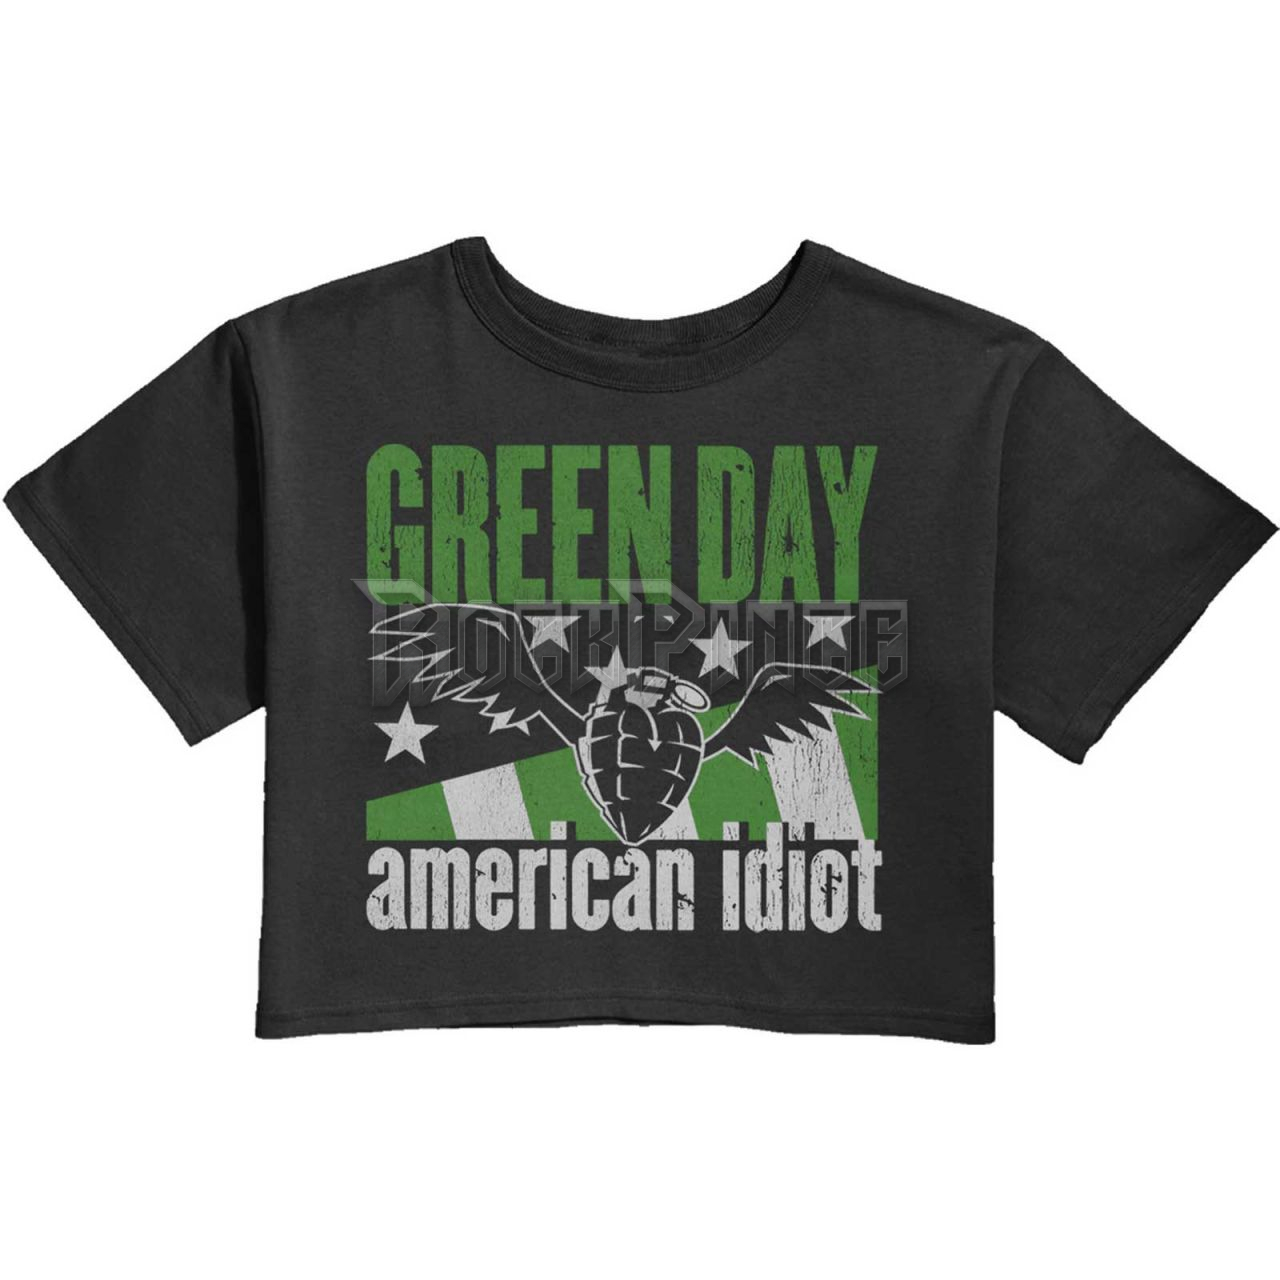 Green Day - American Idiot Wings - női crop top - GDCT47LB